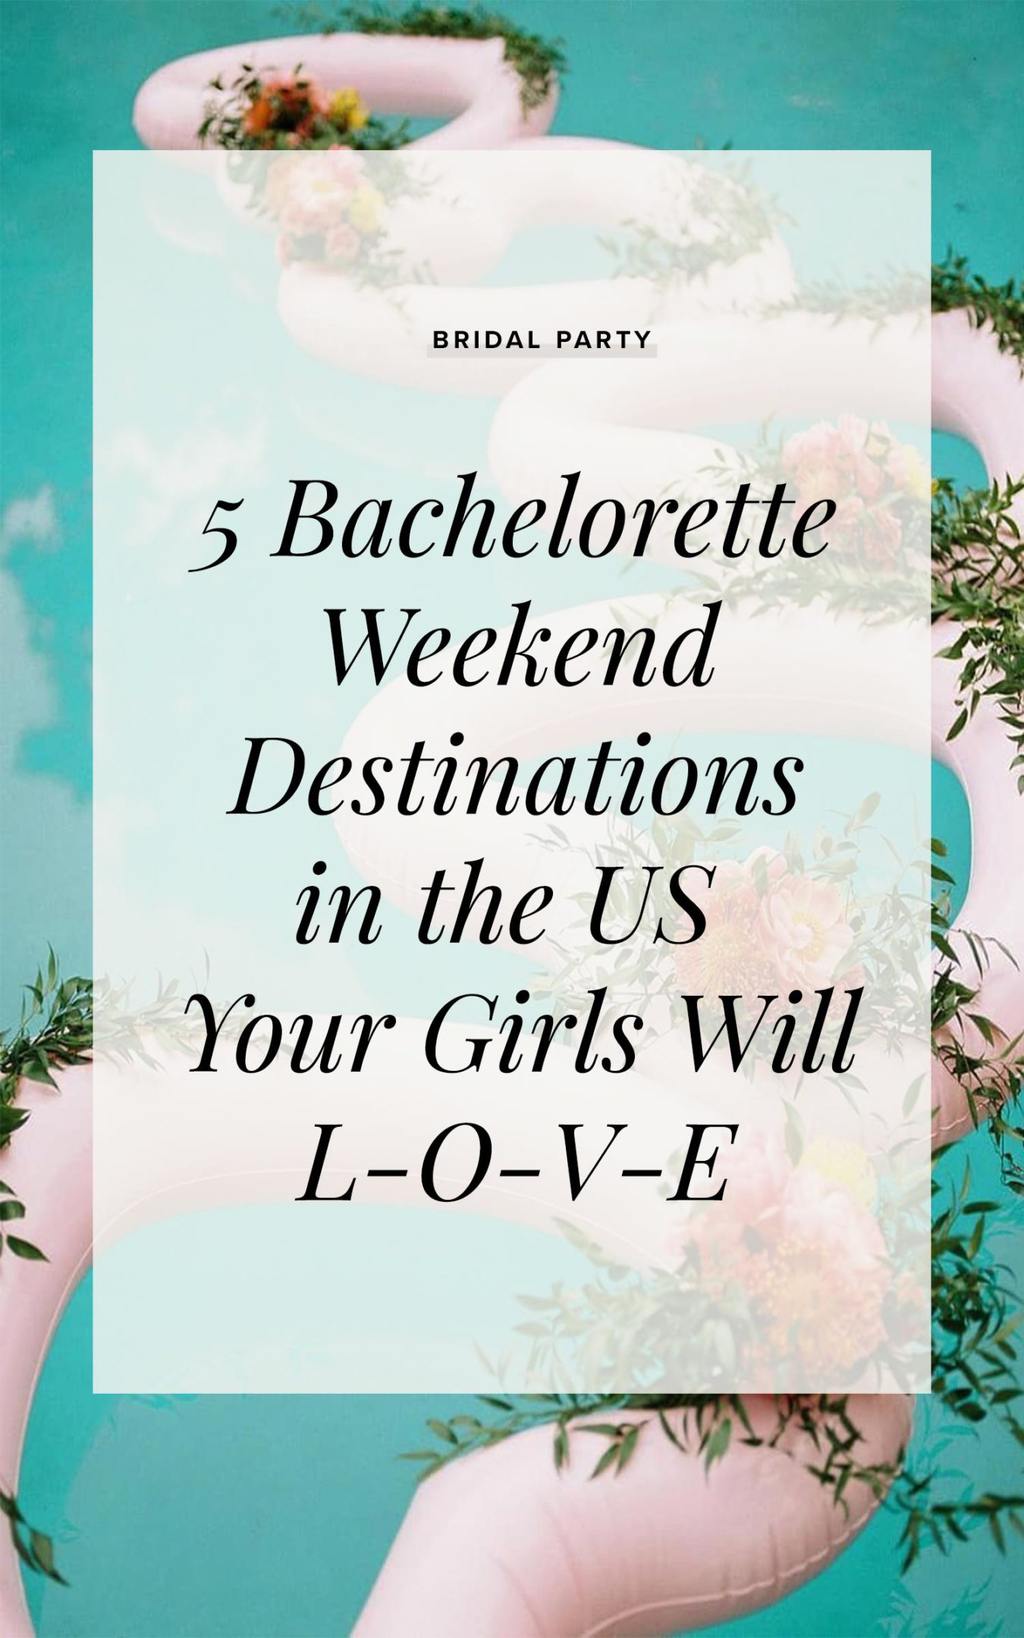 Bachelorette Weekend Destinations Postcover 1350x2160